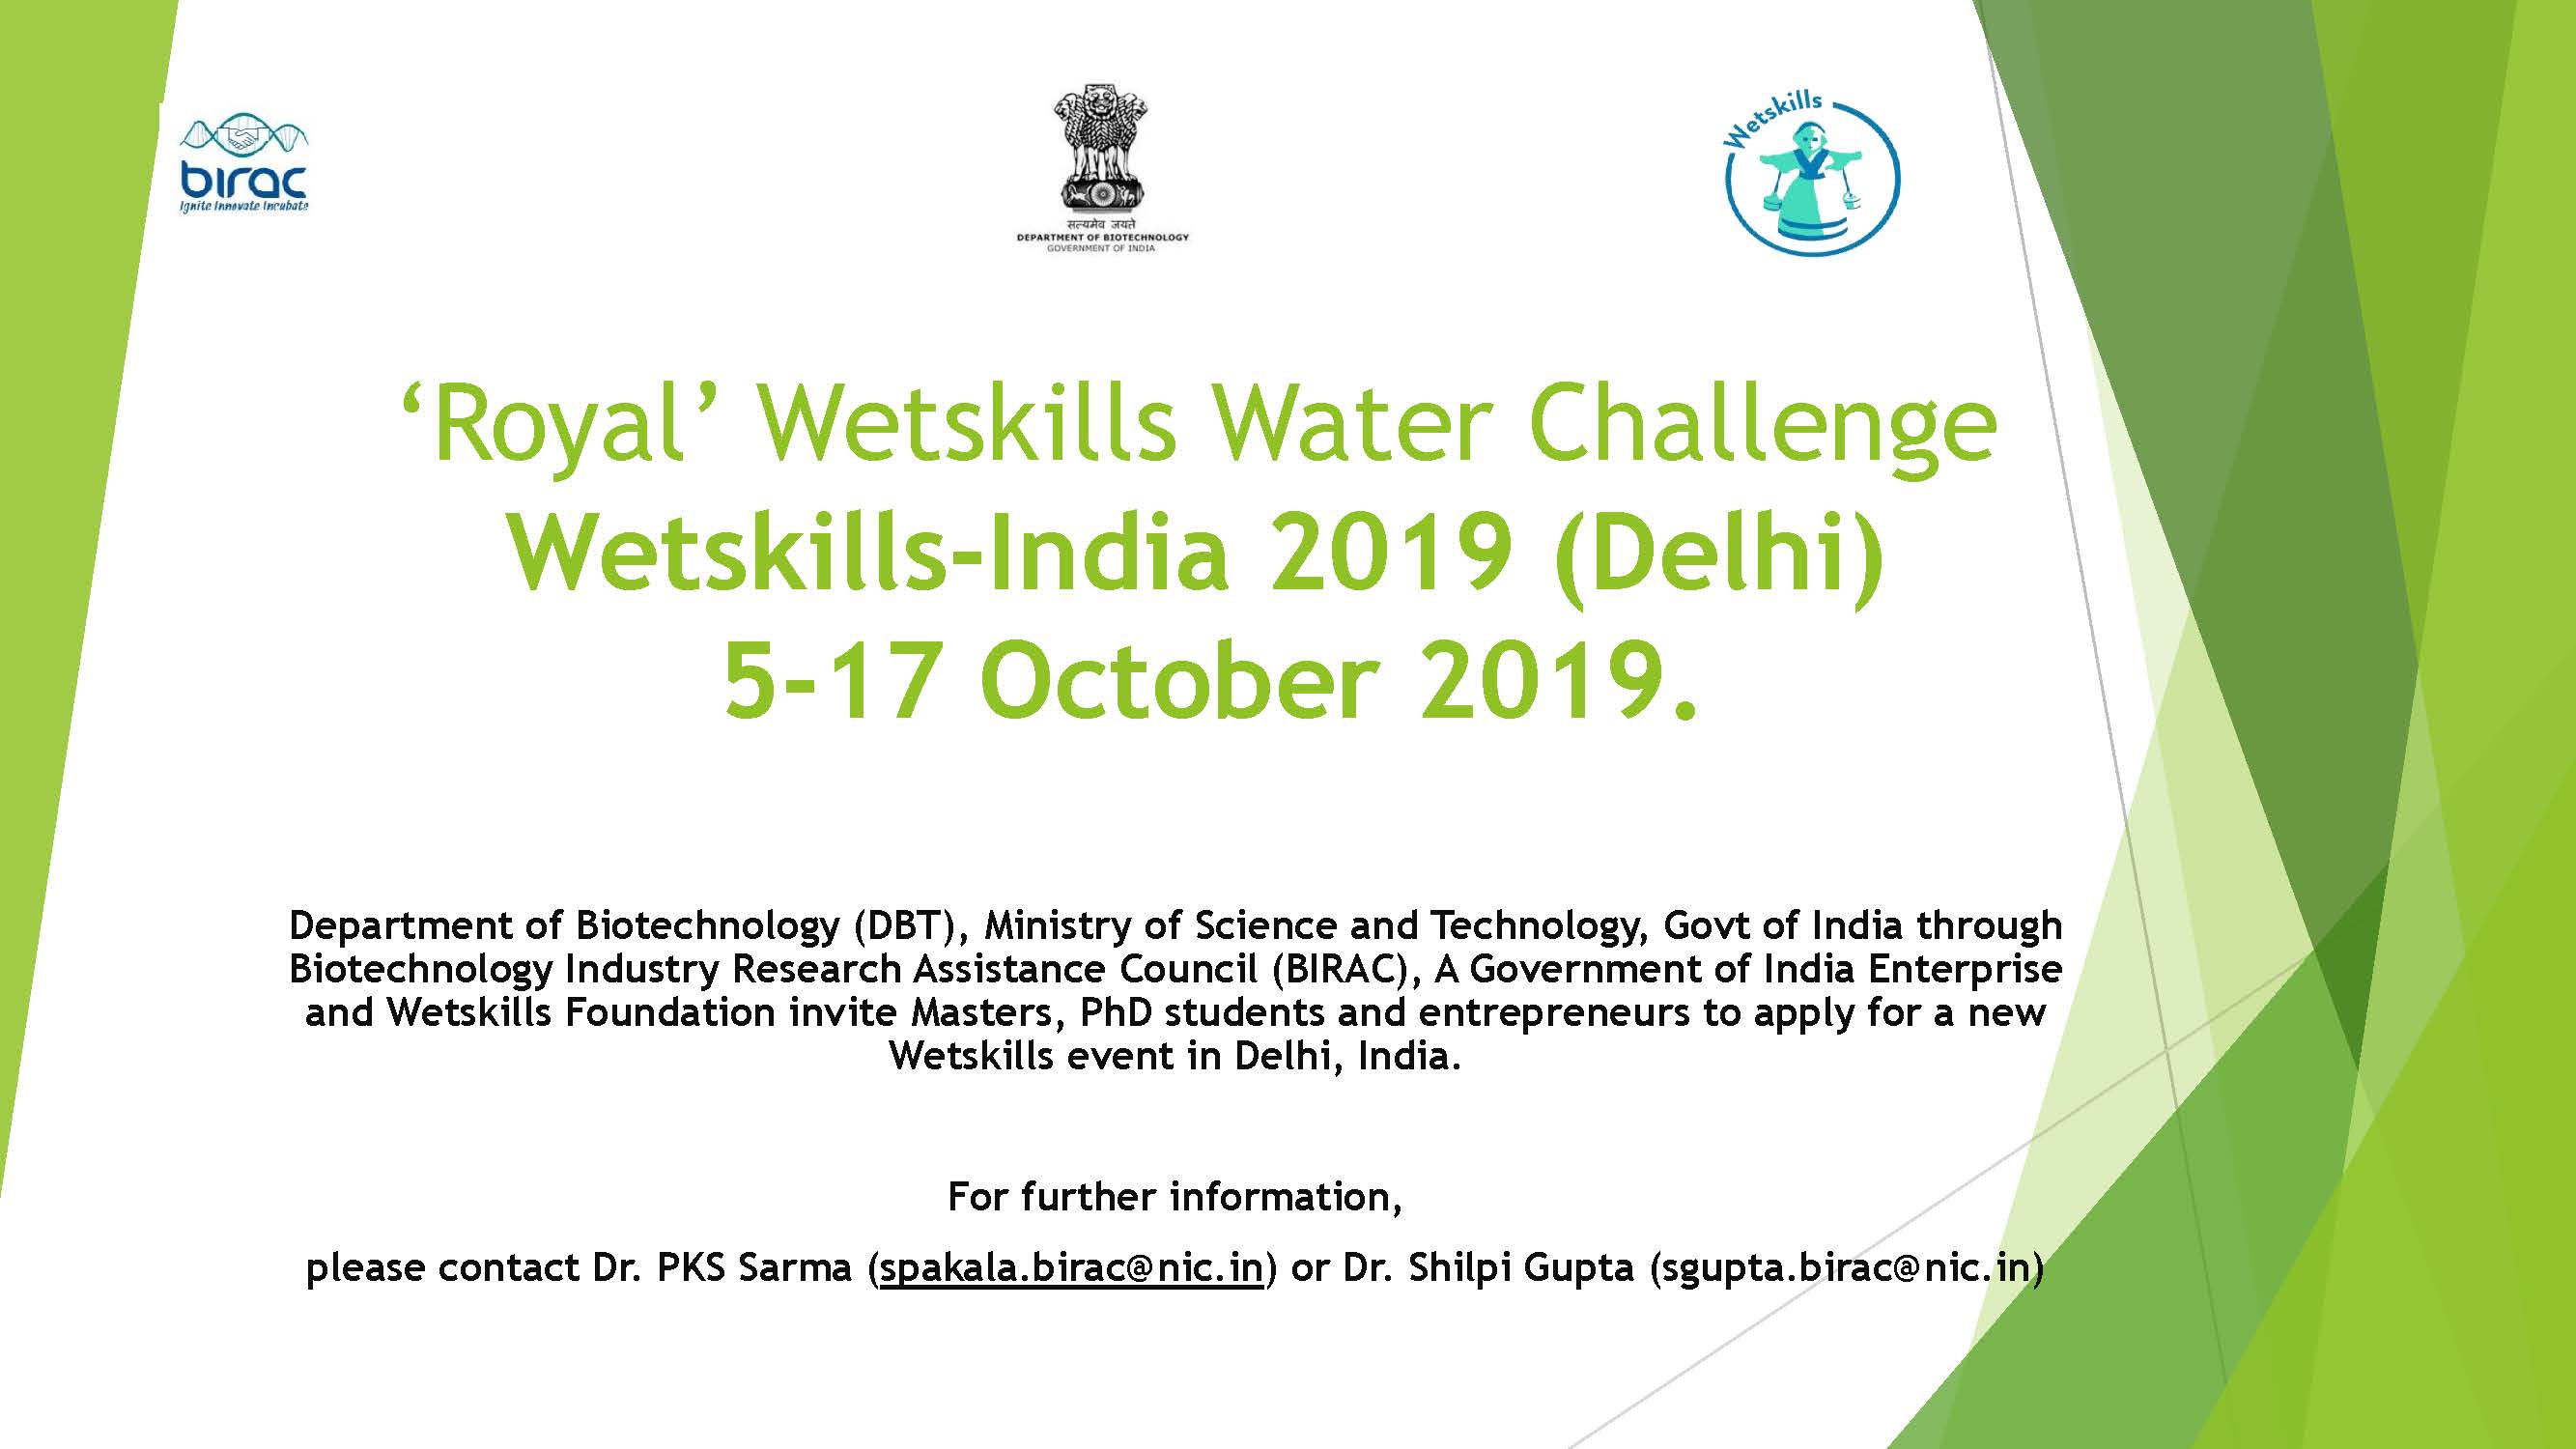 Royal Wetskills Water Challenge to Delhi, India